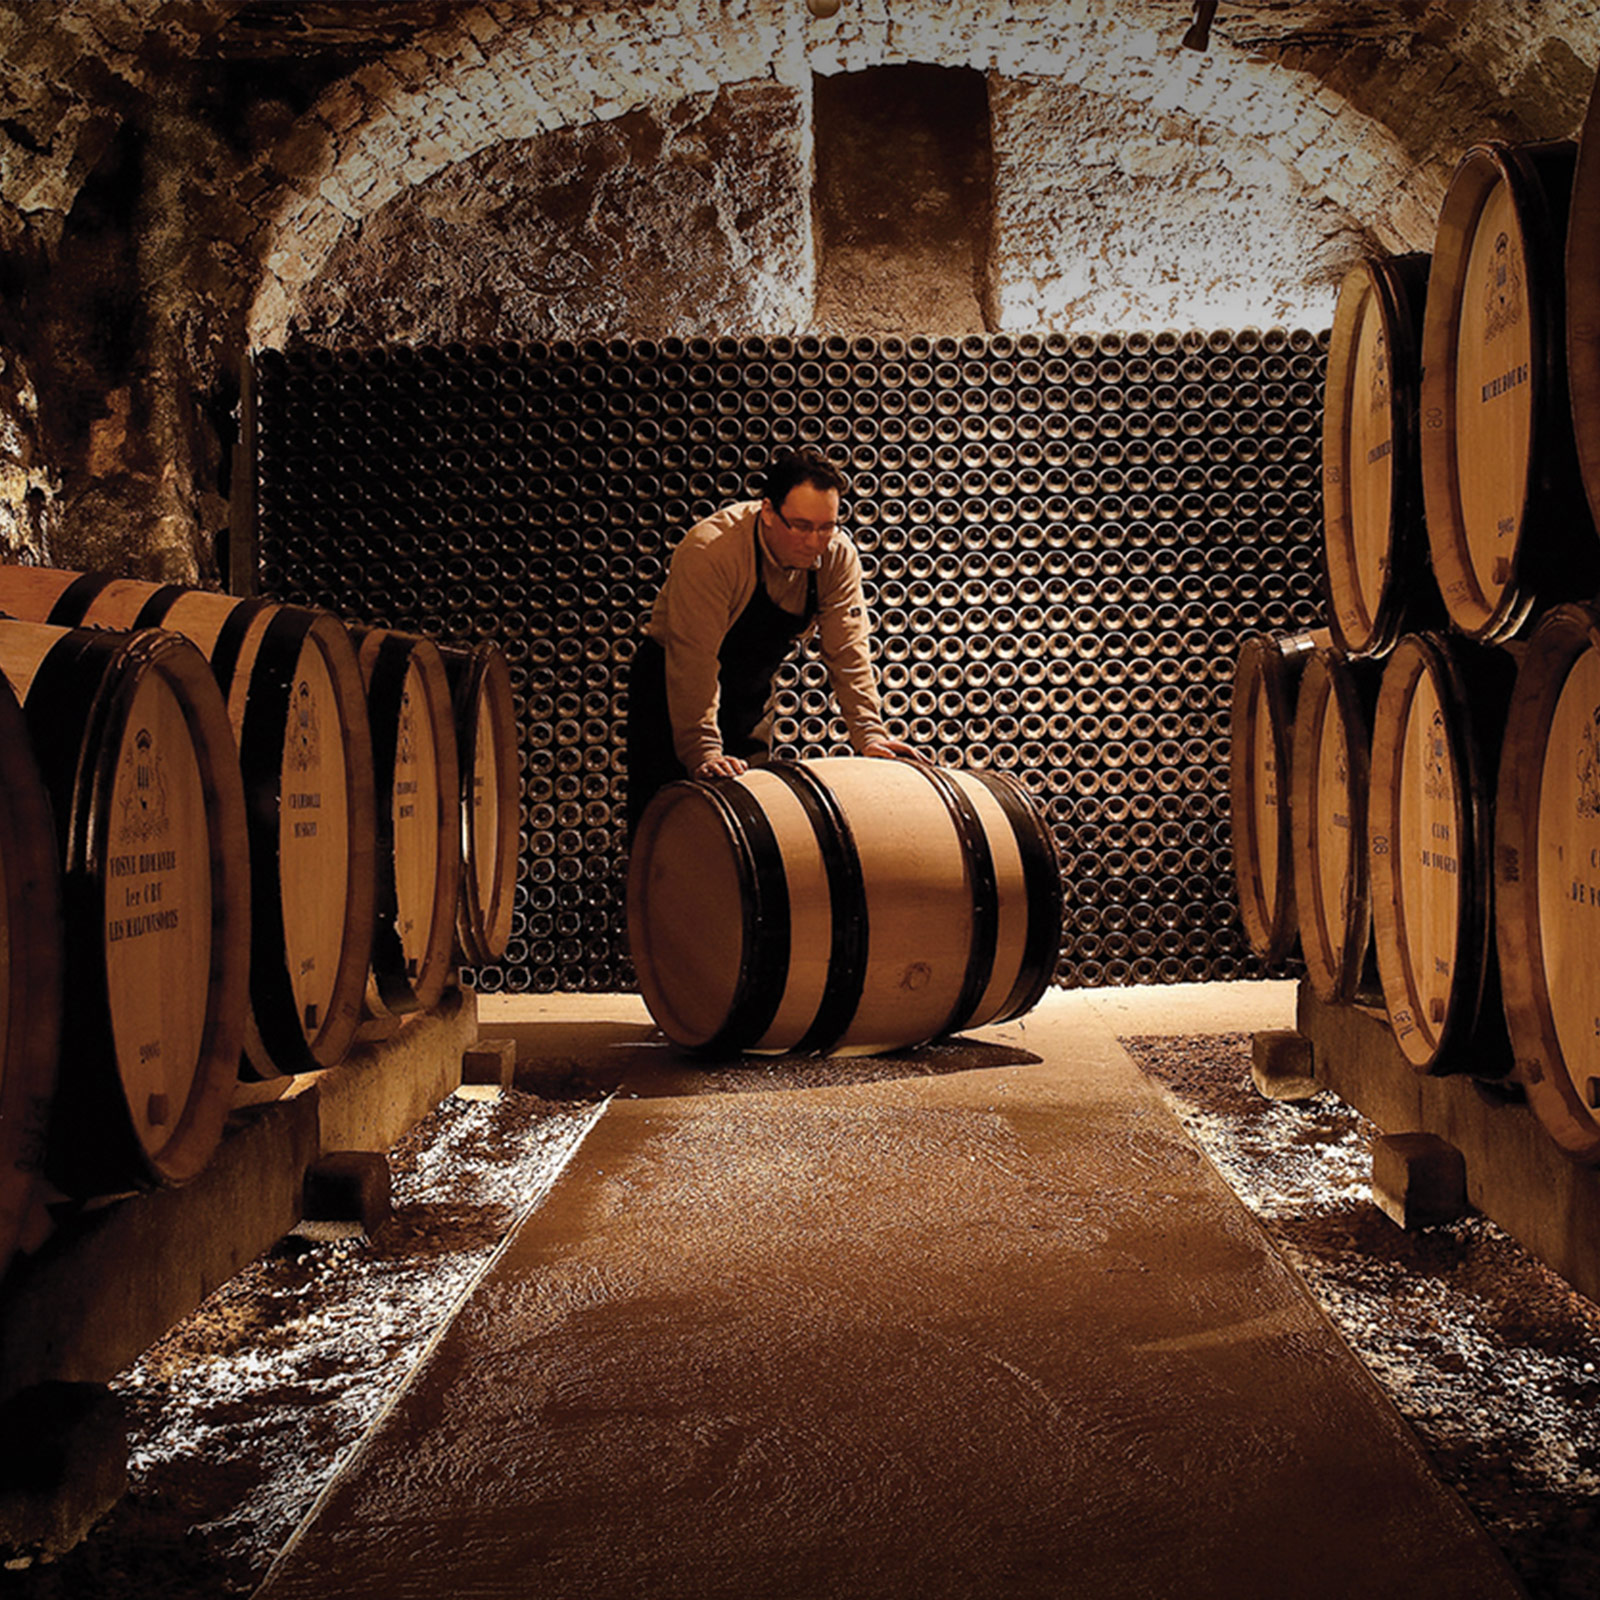 Vintner in a wine cellar rolling a wine barrel